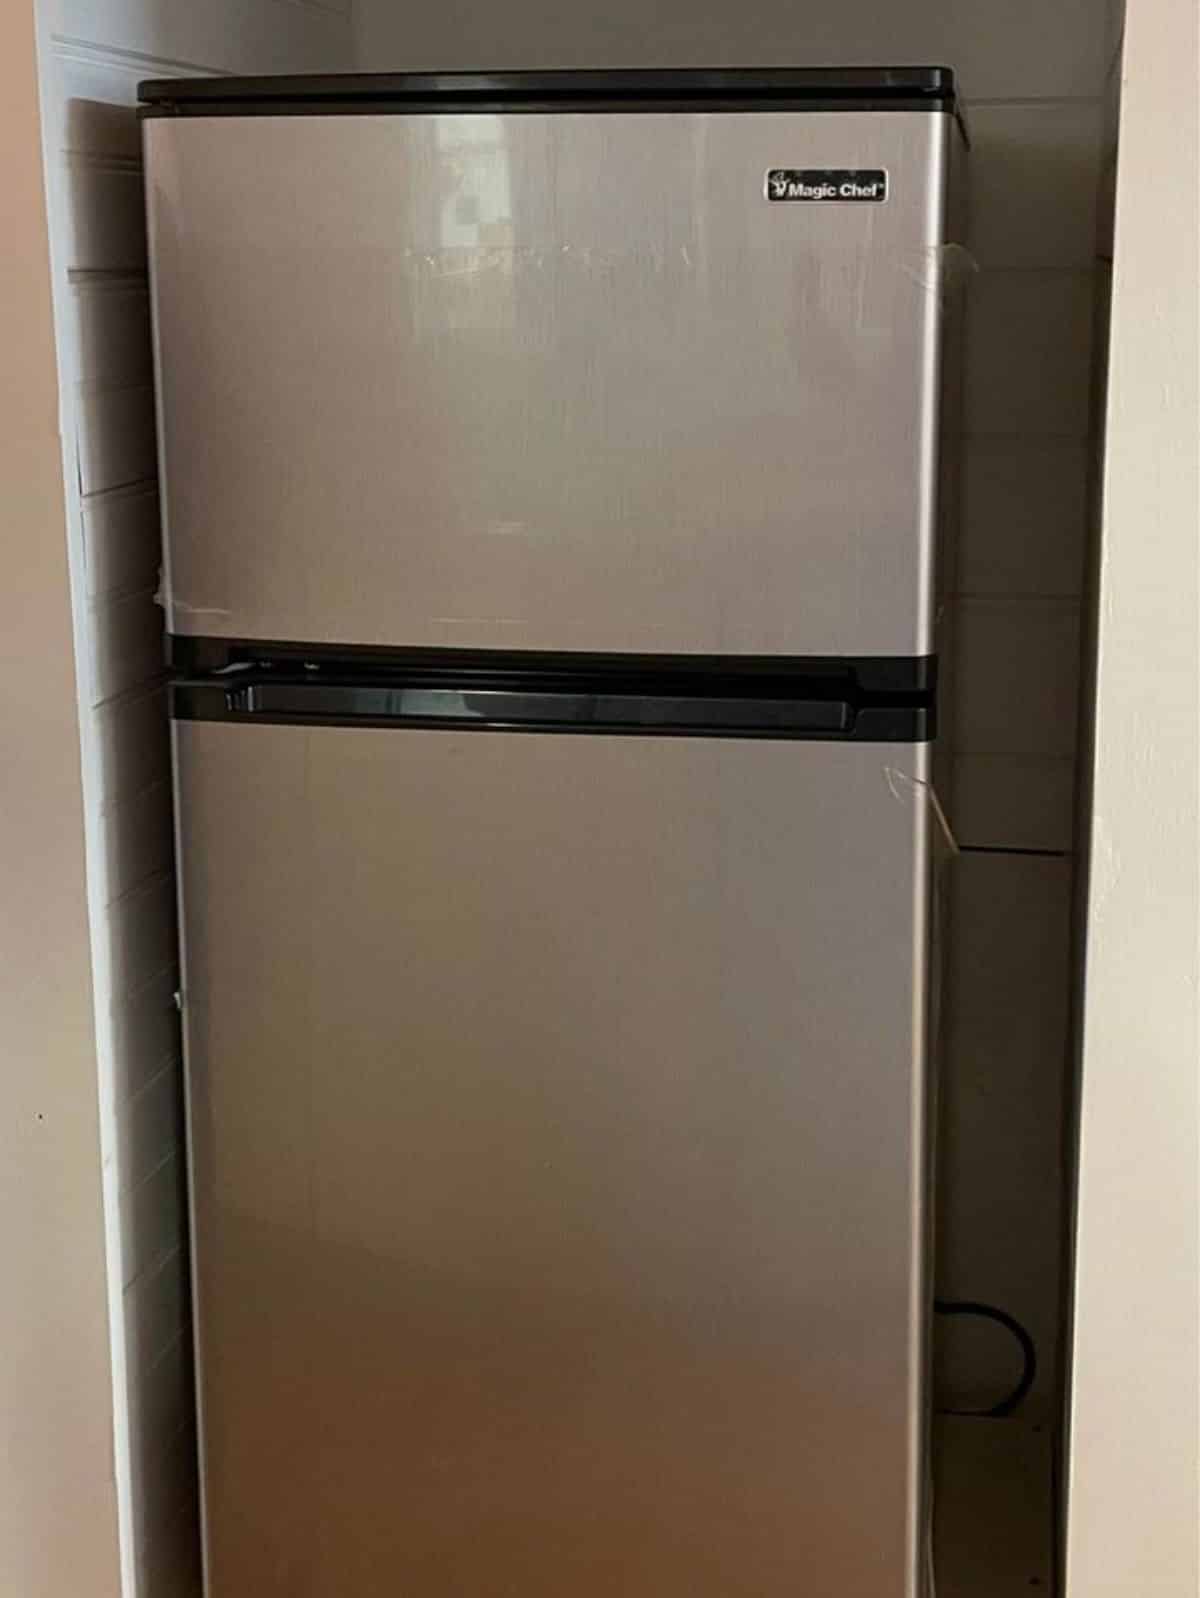 Double door refrigerator installed in kitchen area of 1 Bedroom Tiny House